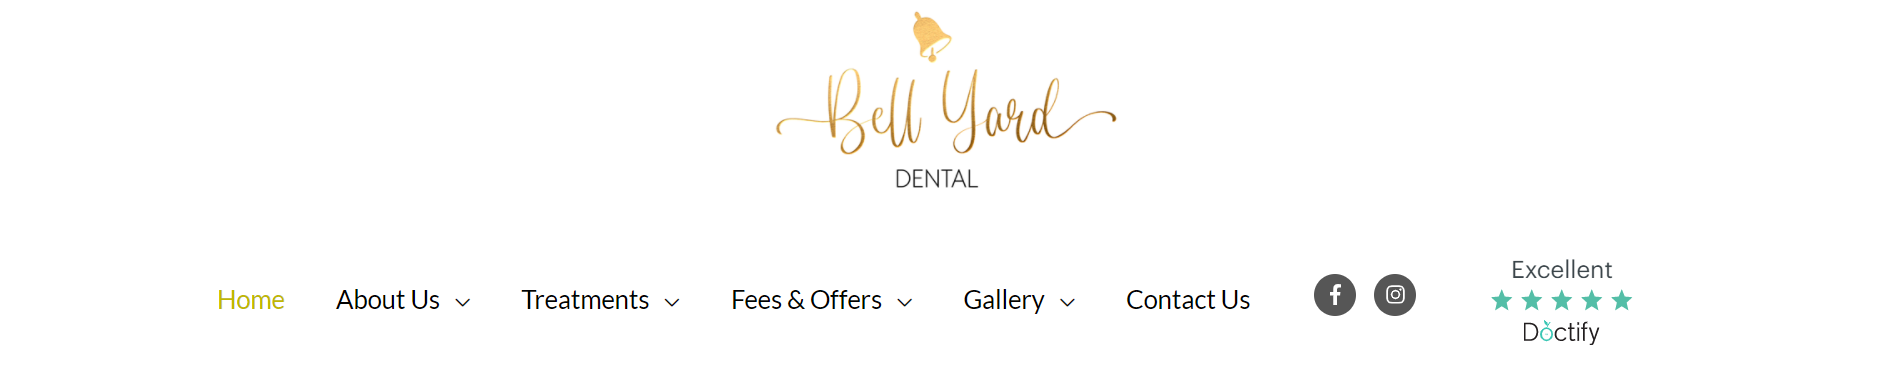 bellyard dental